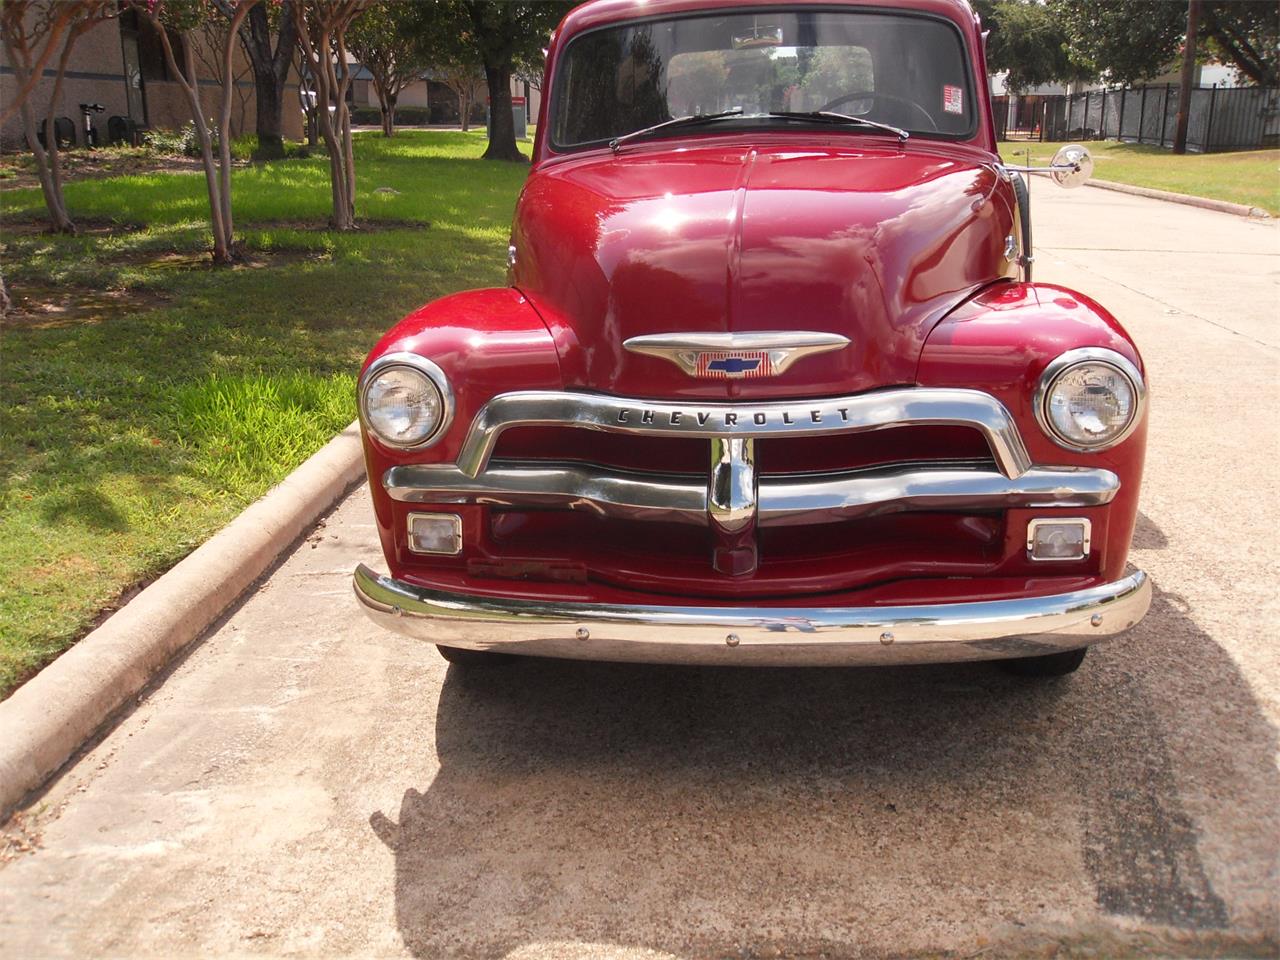 For Sale: 1955 Chevrolet 3100 in Houston, Texas for sale in Houston, TX